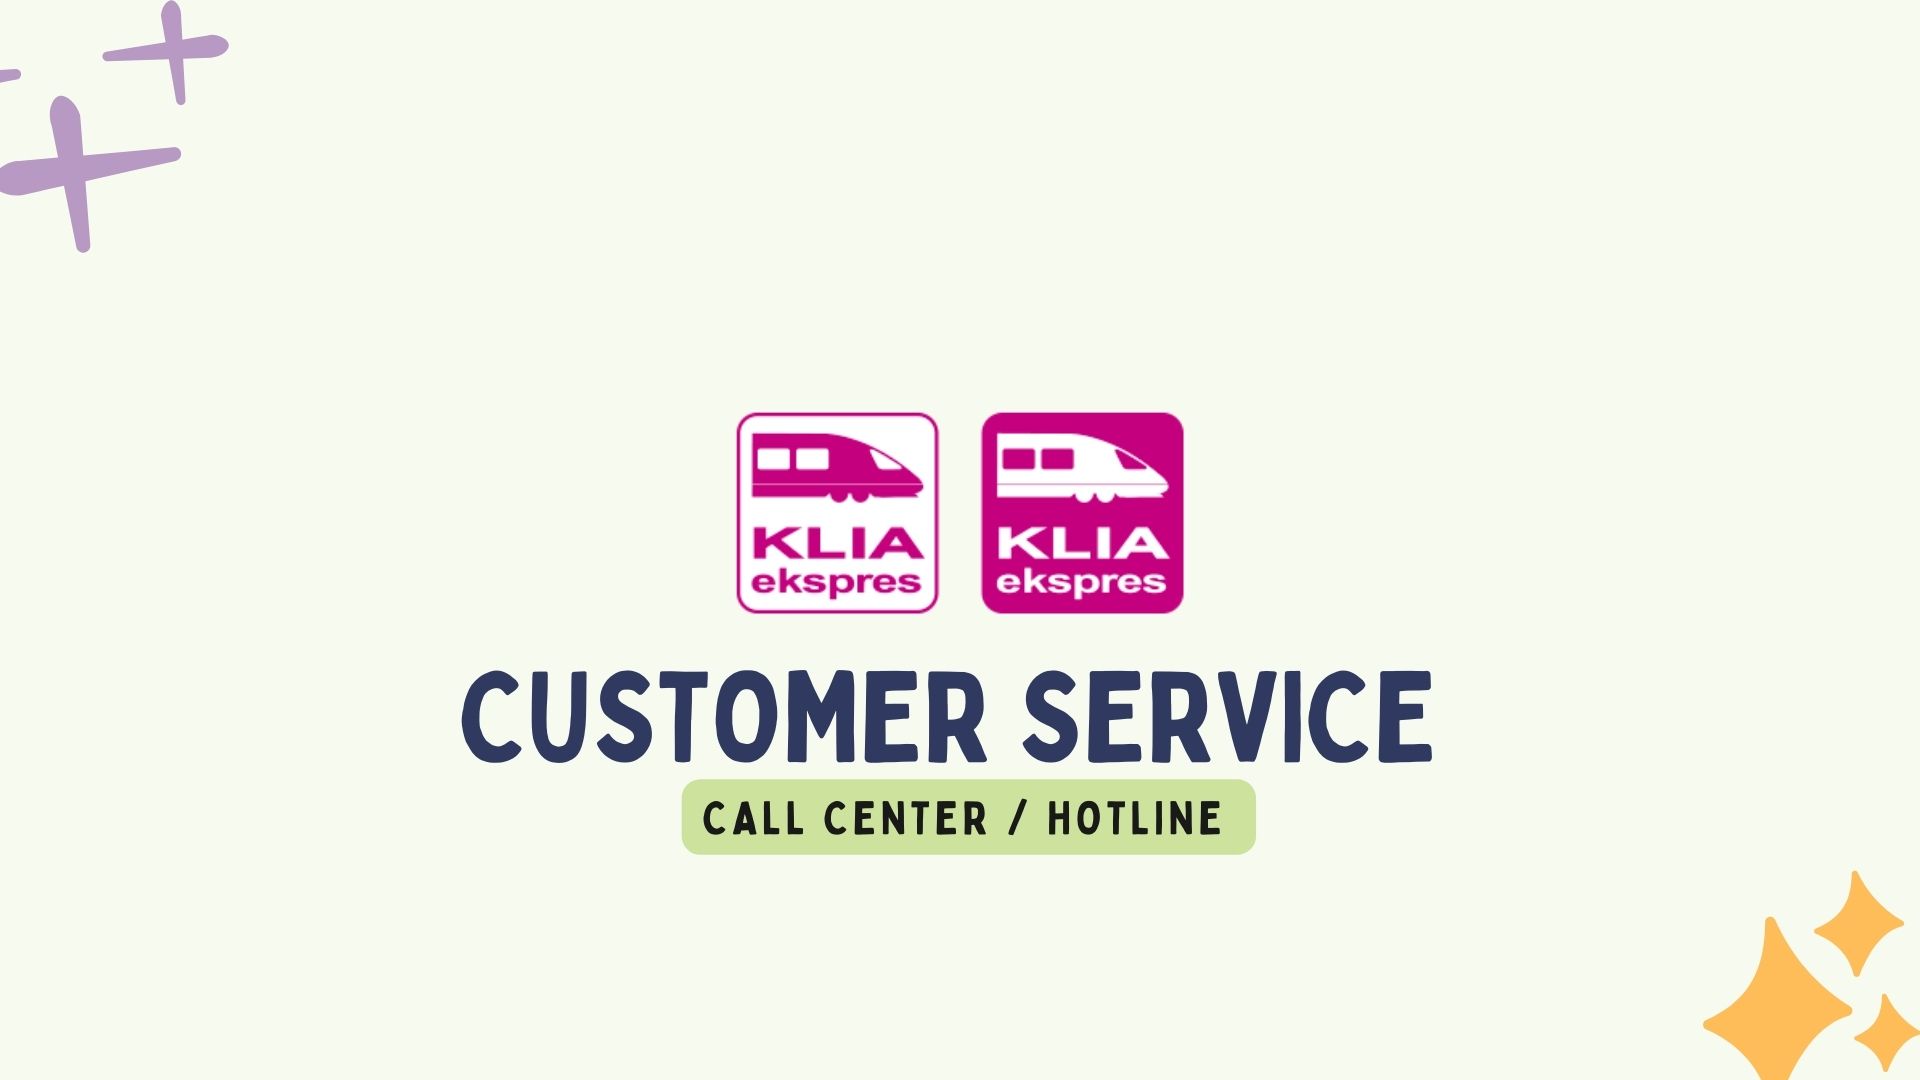 KLIA Express Customer Service